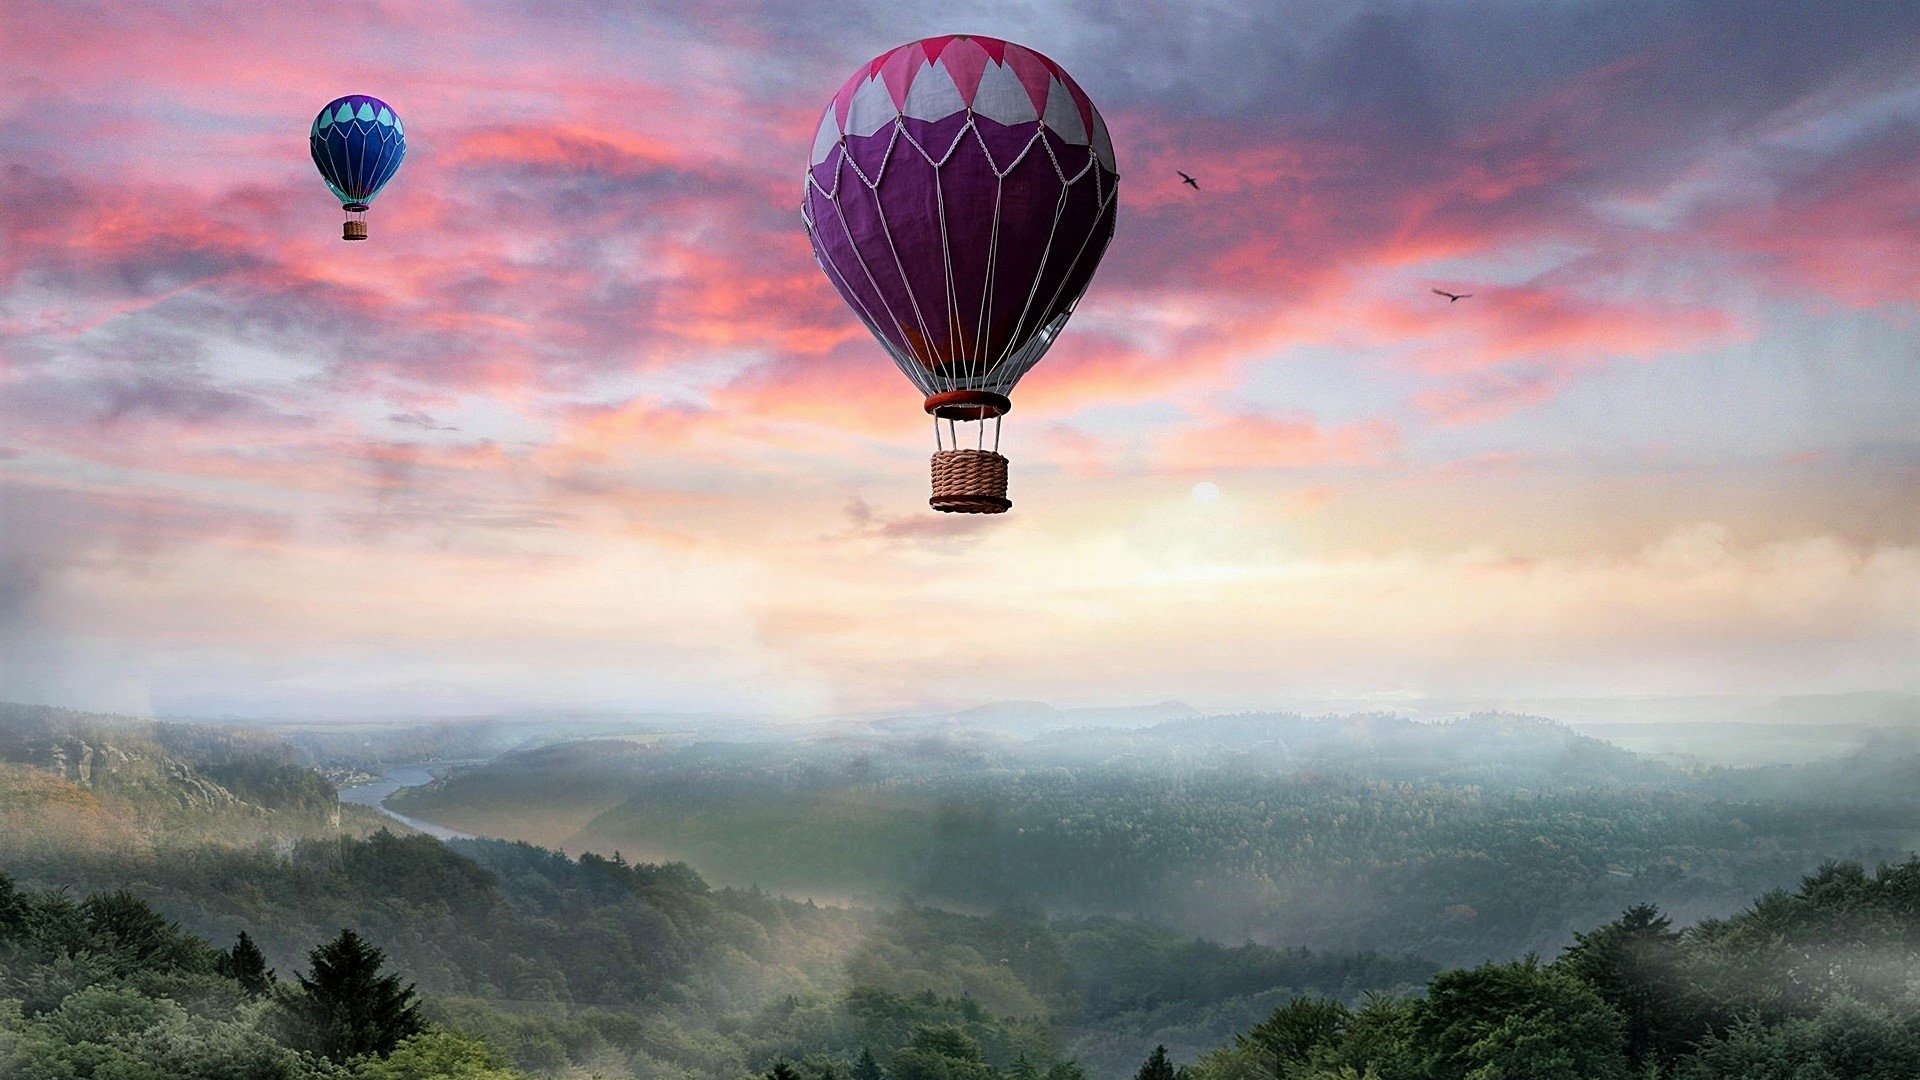 Hot Air Ballooning Hd Wallpaper Background Image